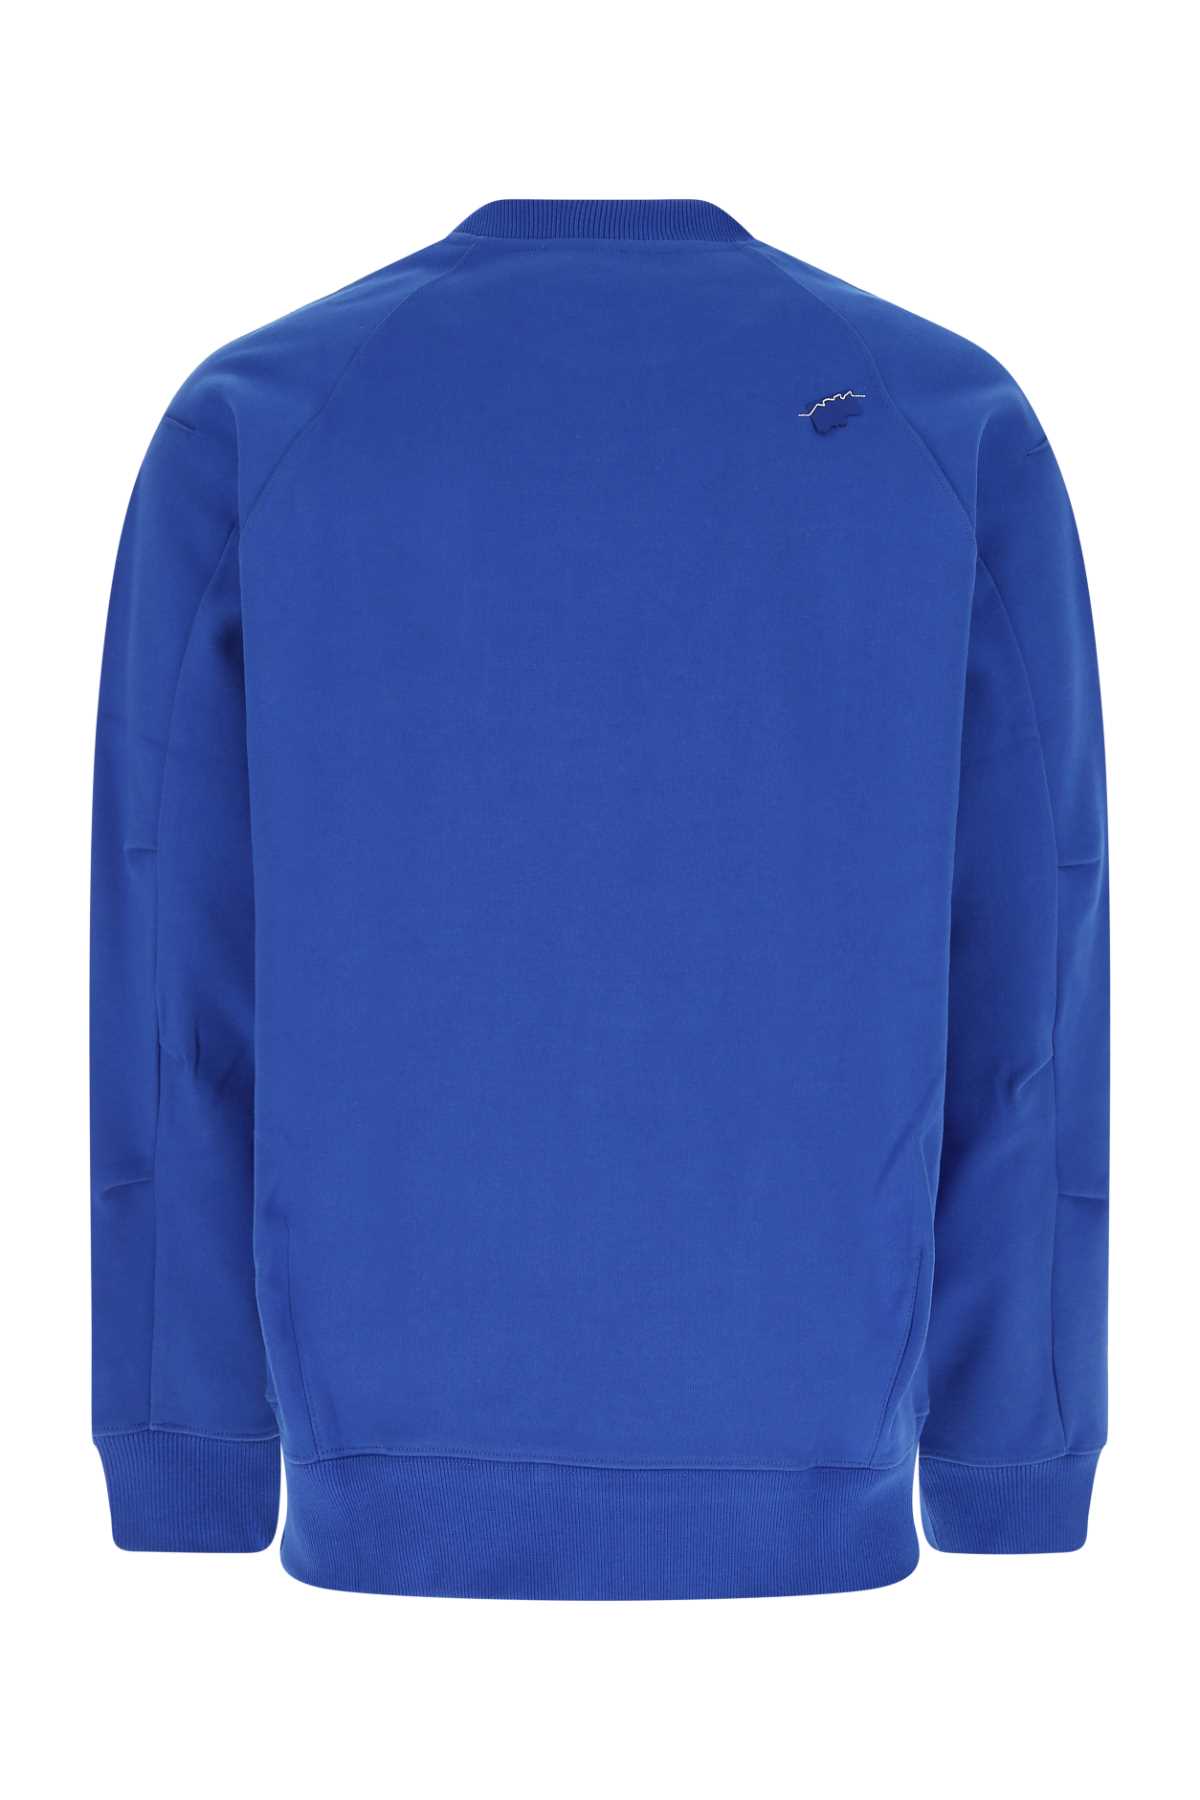 Shop Ader Error Electric Blue Cotton Blend Sweatshirt